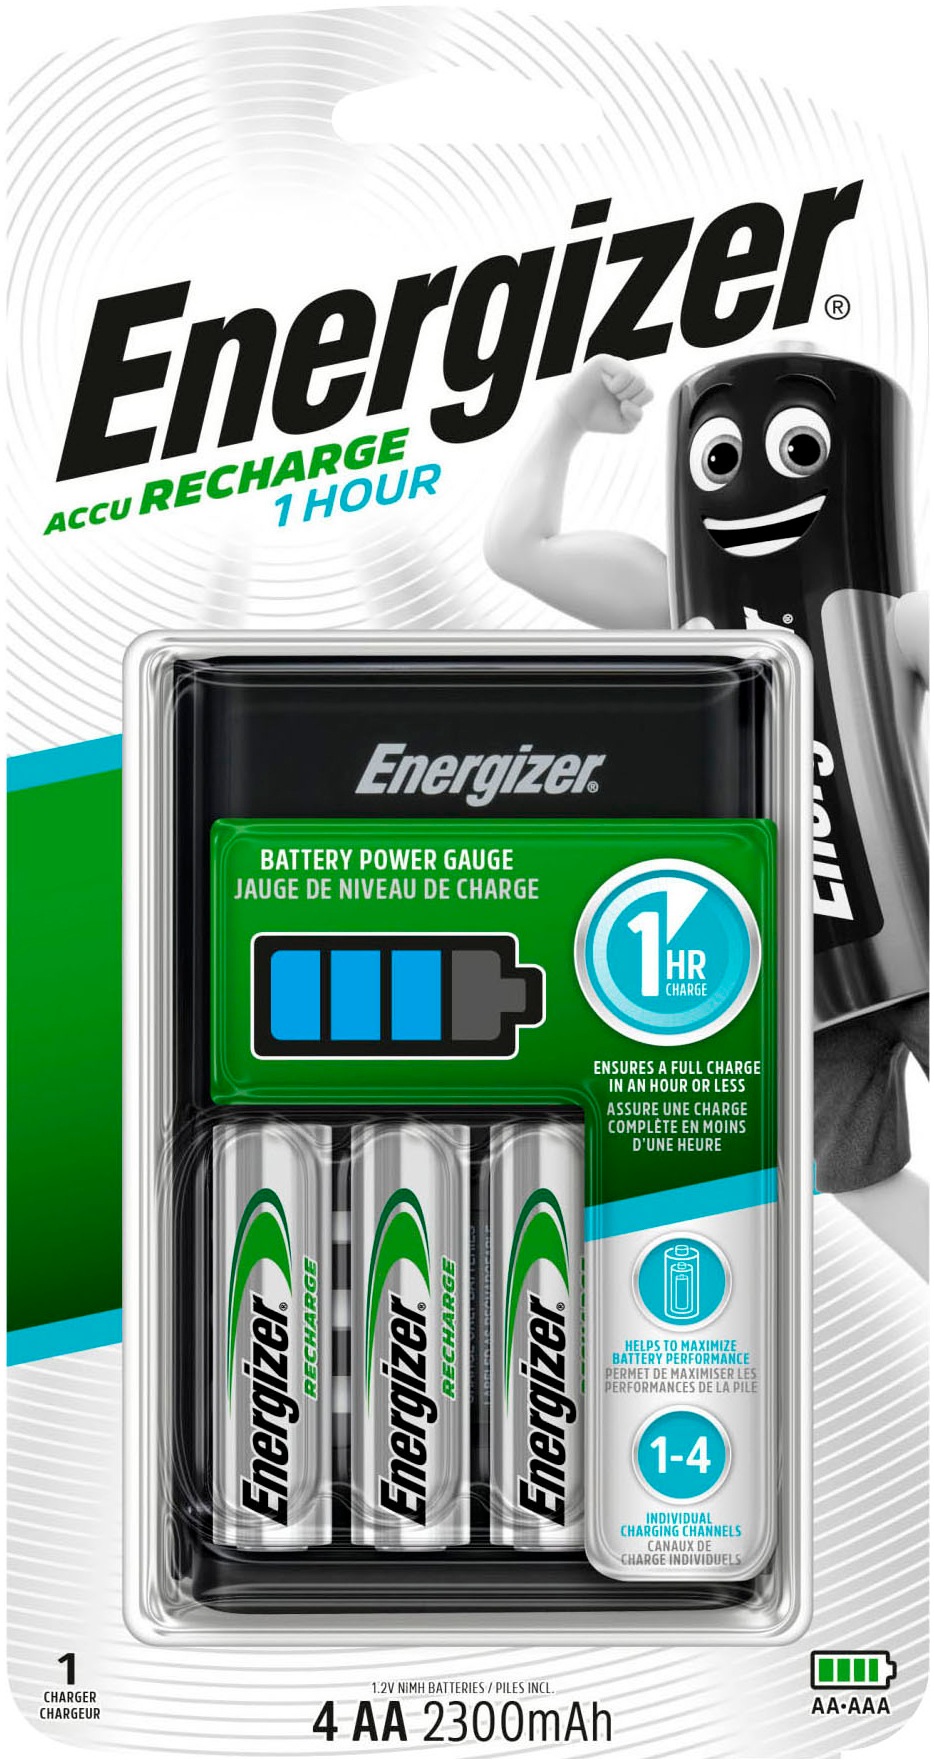 Batterie-Ladegerät »CH1HR3 1 Stunde«, 2500 mA